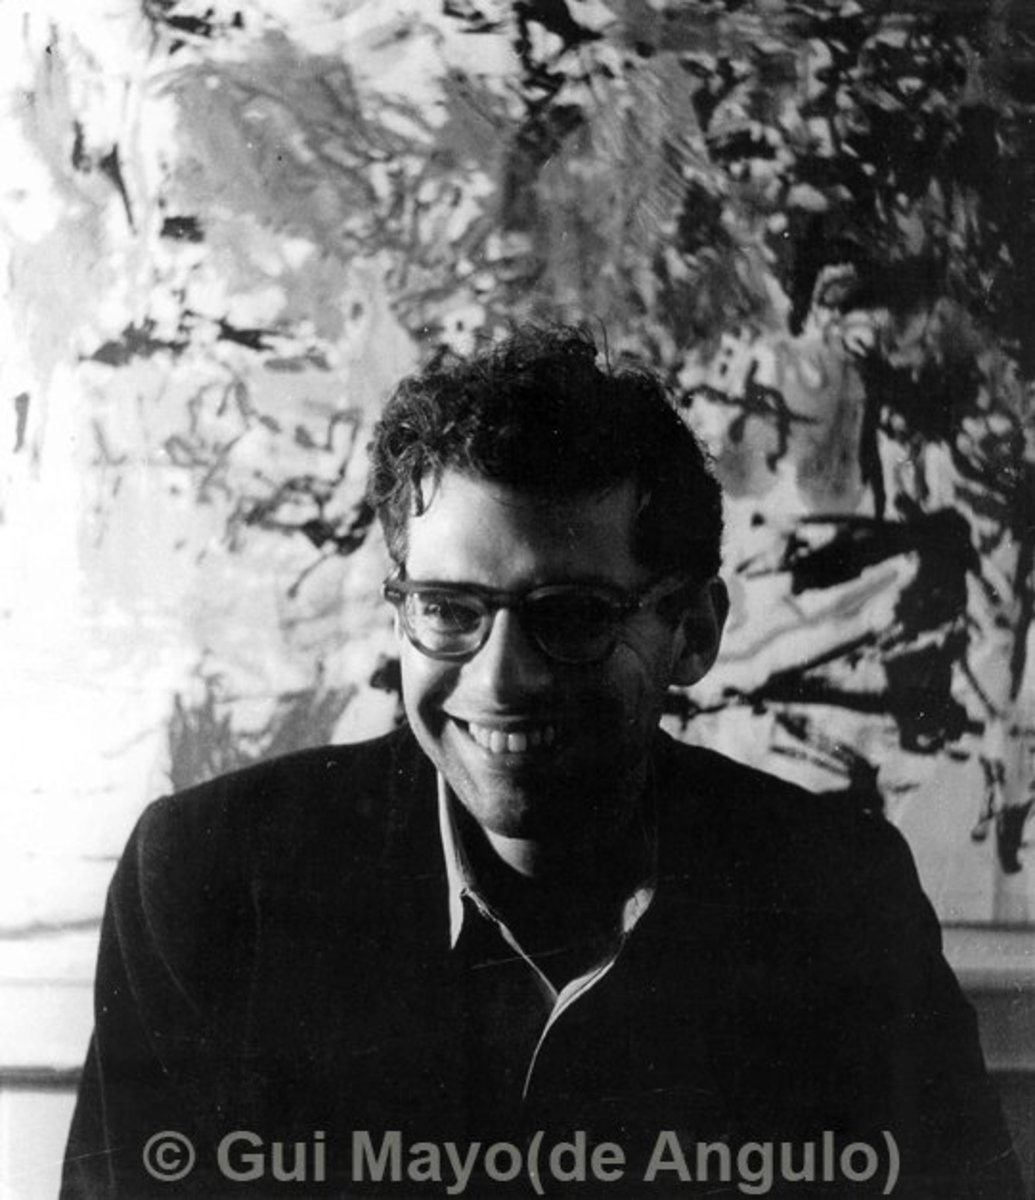  Allen Ginsberg in San Francisco (Photo by Gui Mayo (de Angulo))